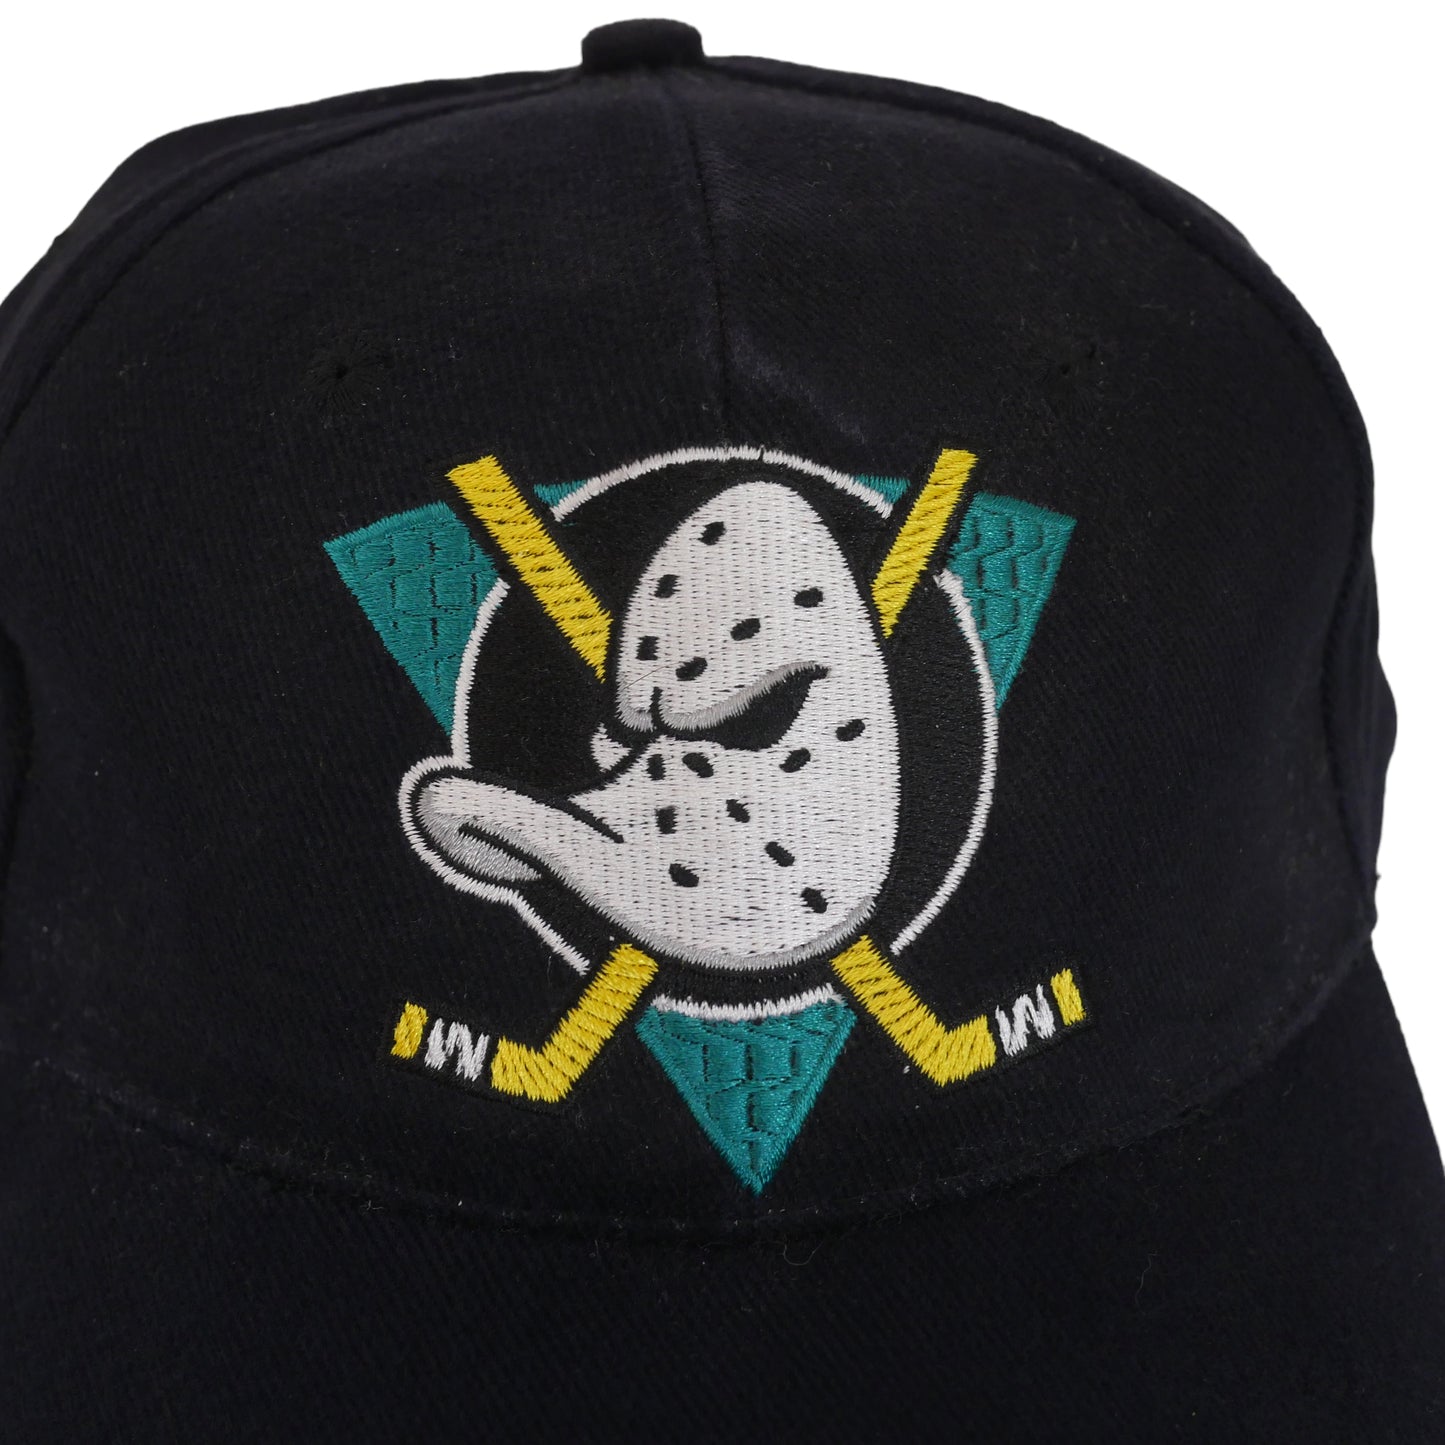 Anaheim Mighty Ducks Snapback Hat